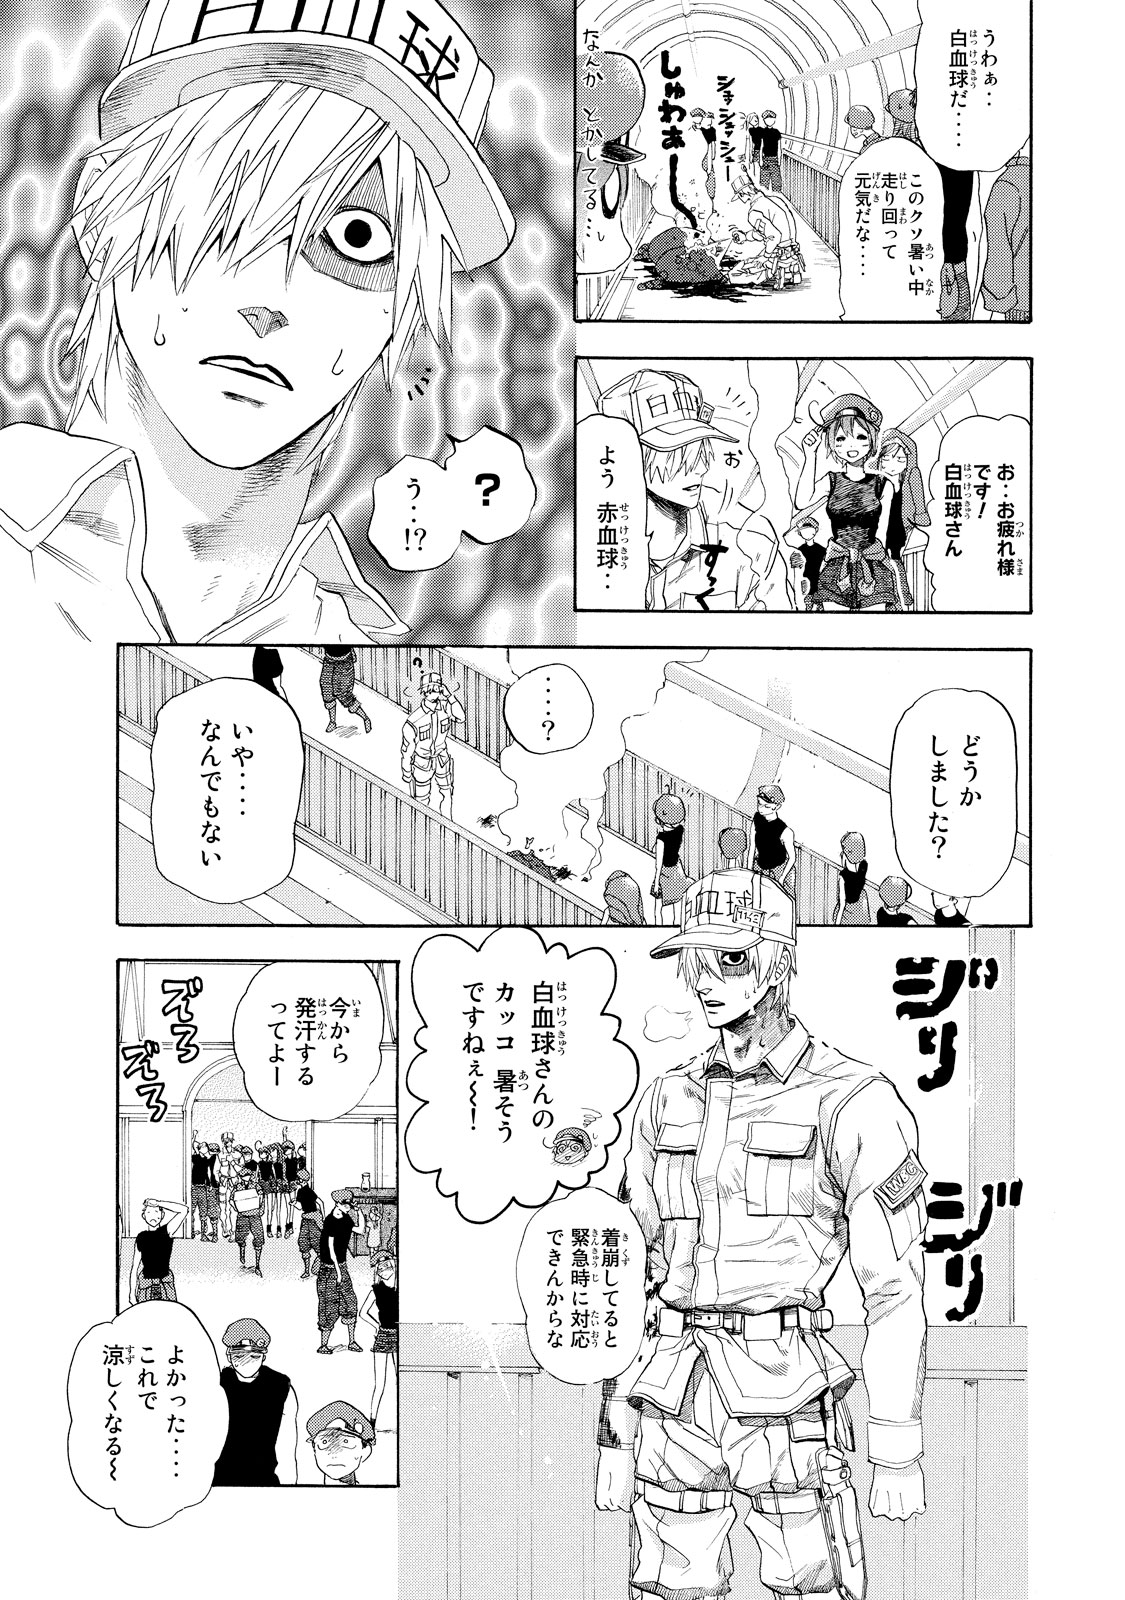 Hataraku Saibou - Chapter 6 - Page 5